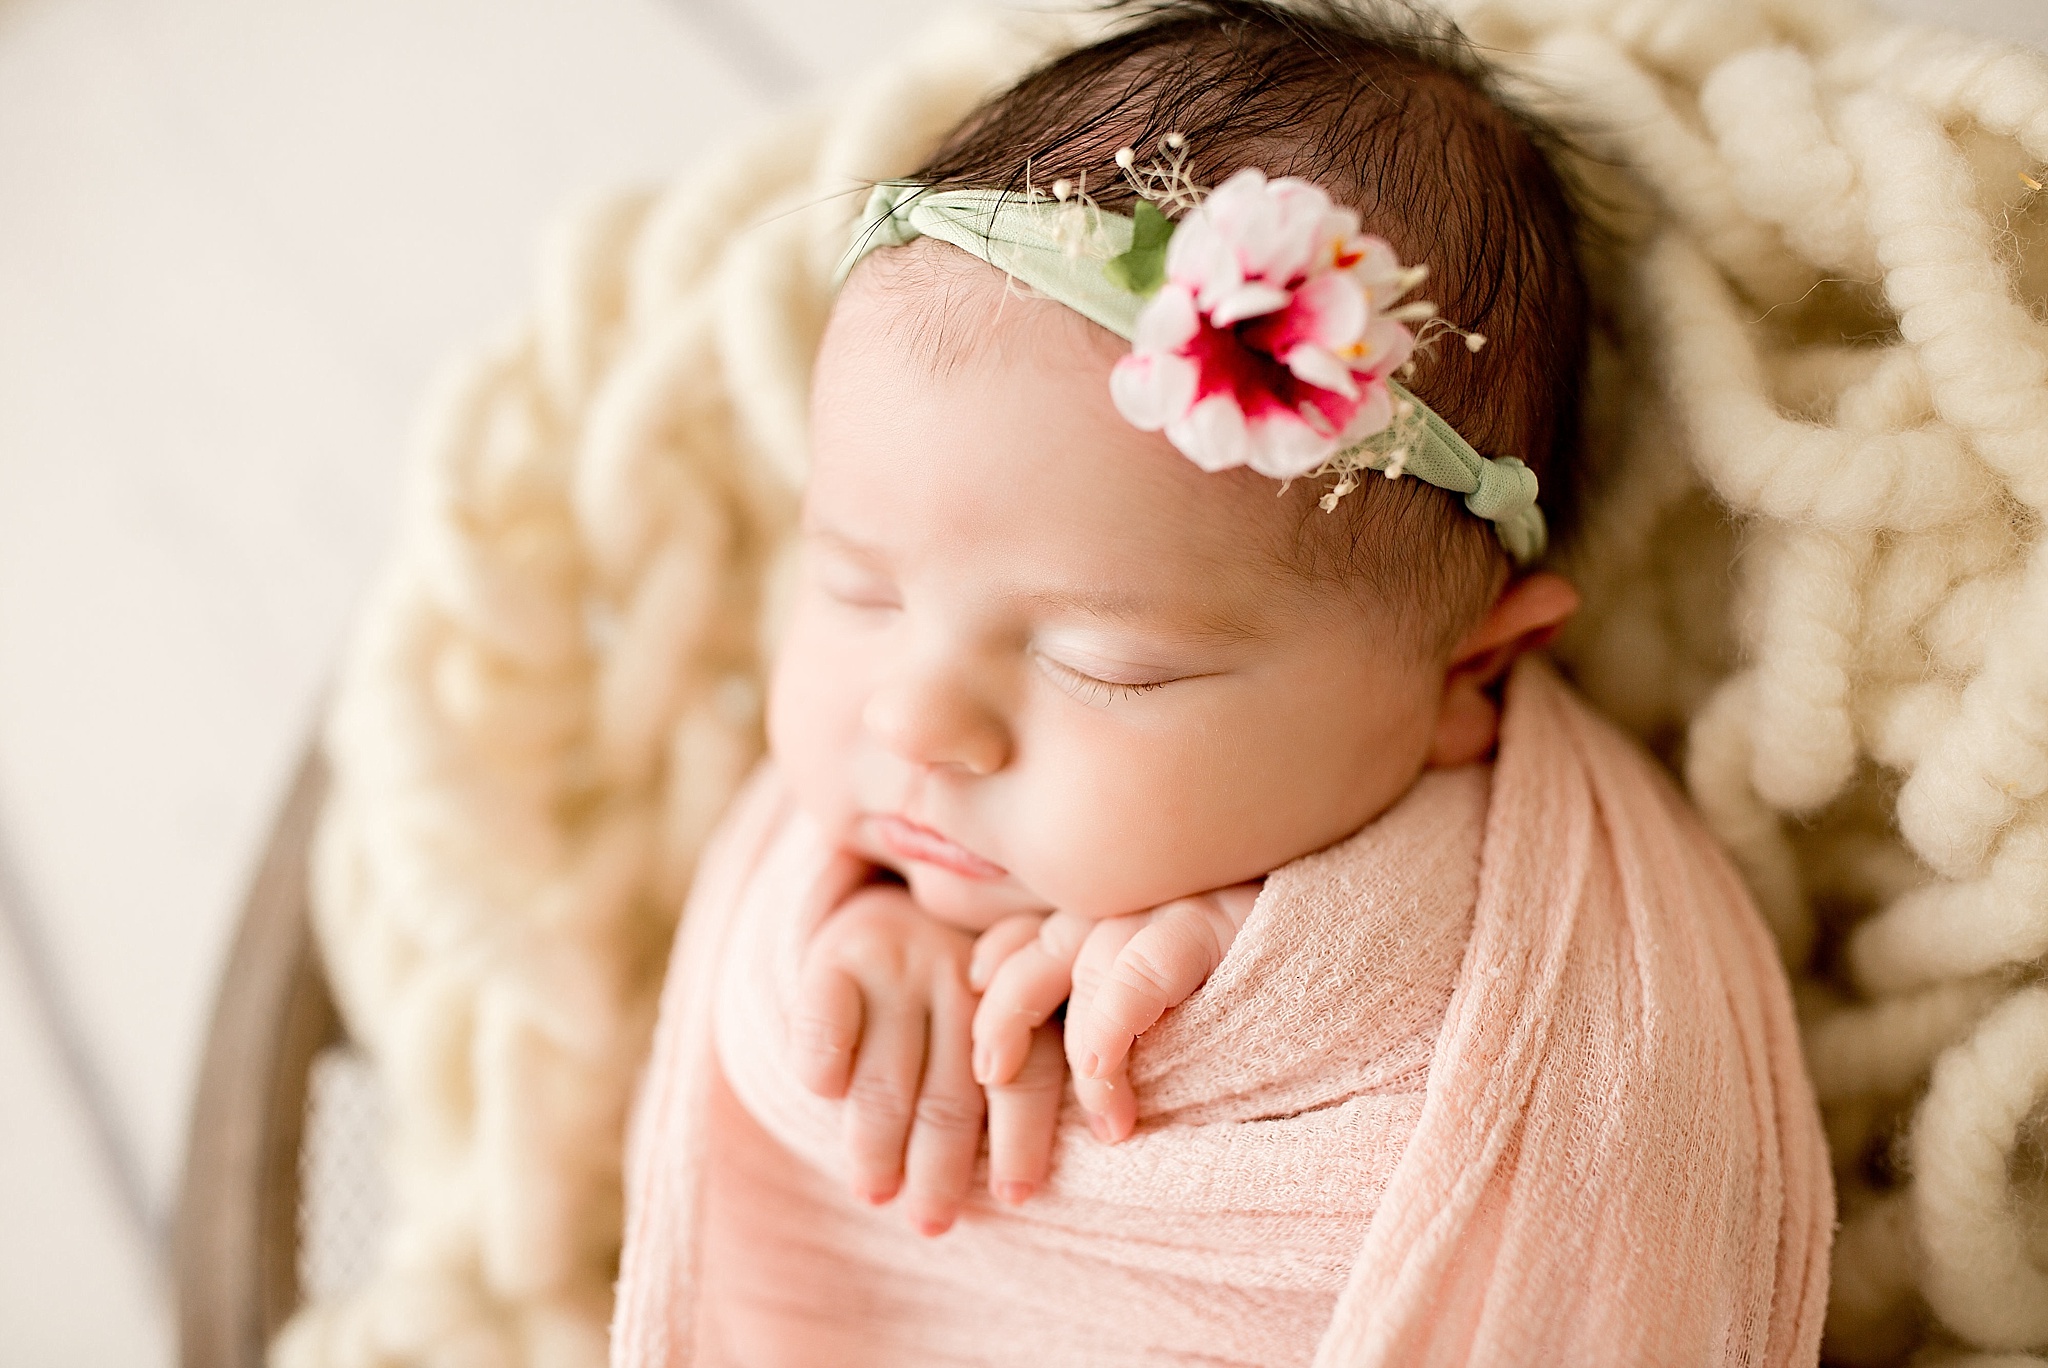 spring floral headband on newborn baby girl